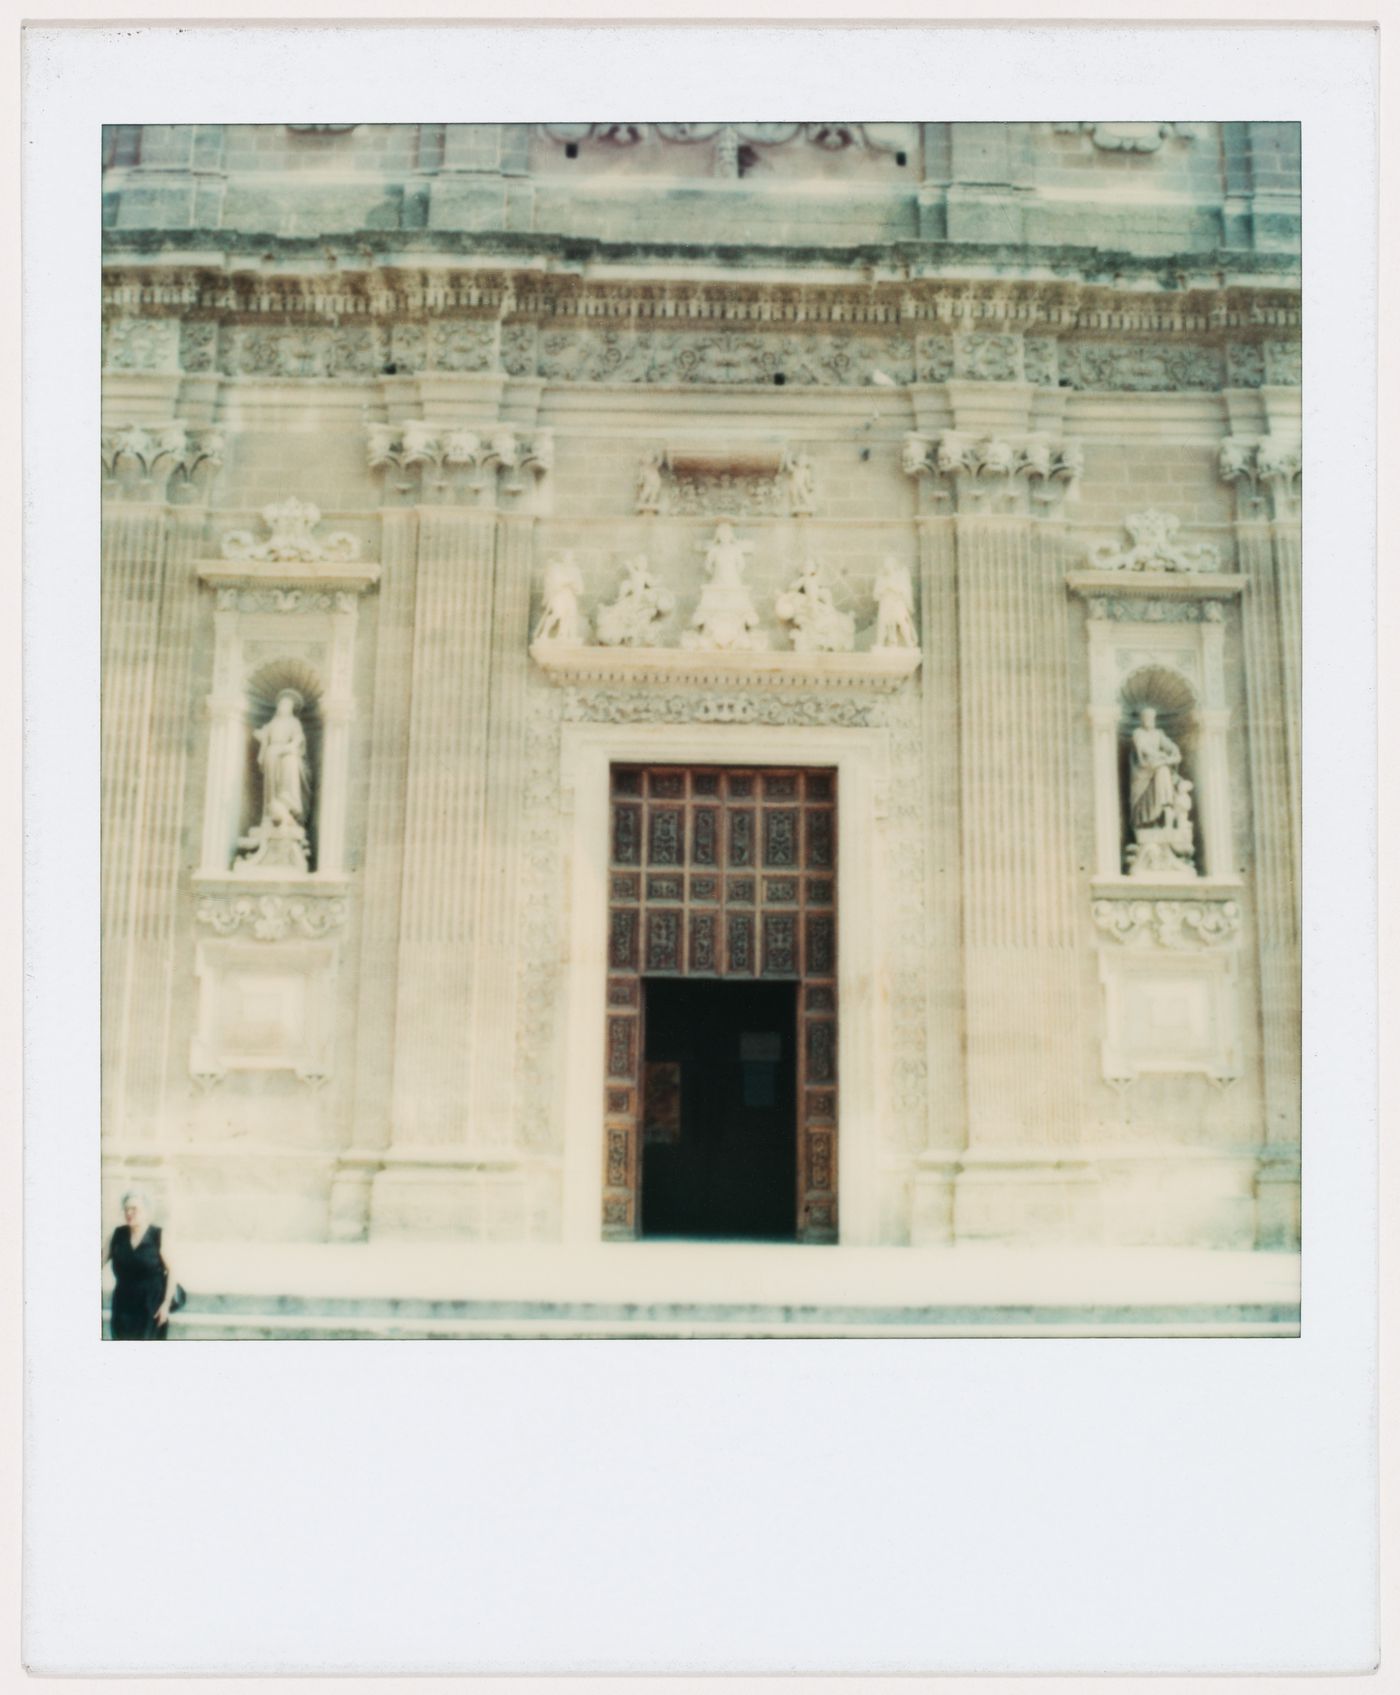 Ornate facade of an historical building, Italy